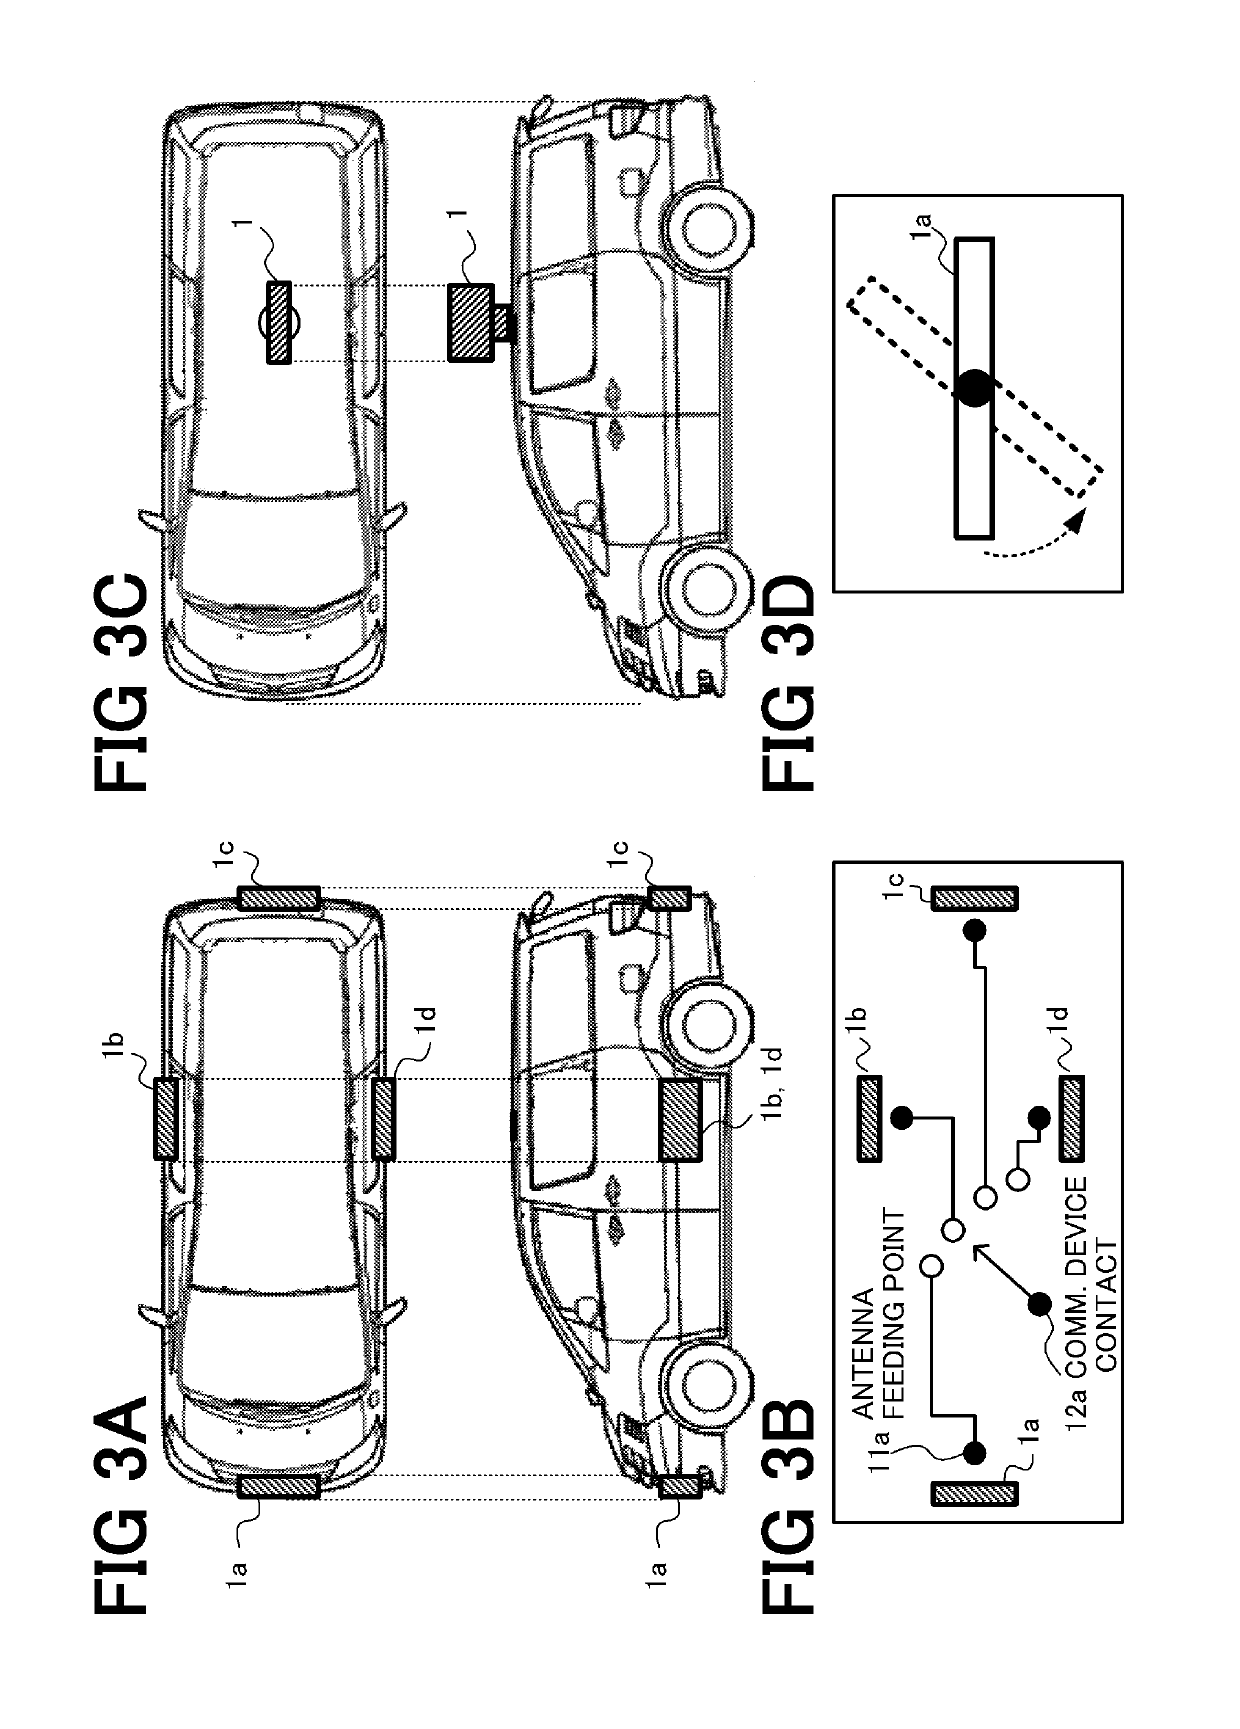 Vehicle-mounted millimeter-wave communication device and communication method